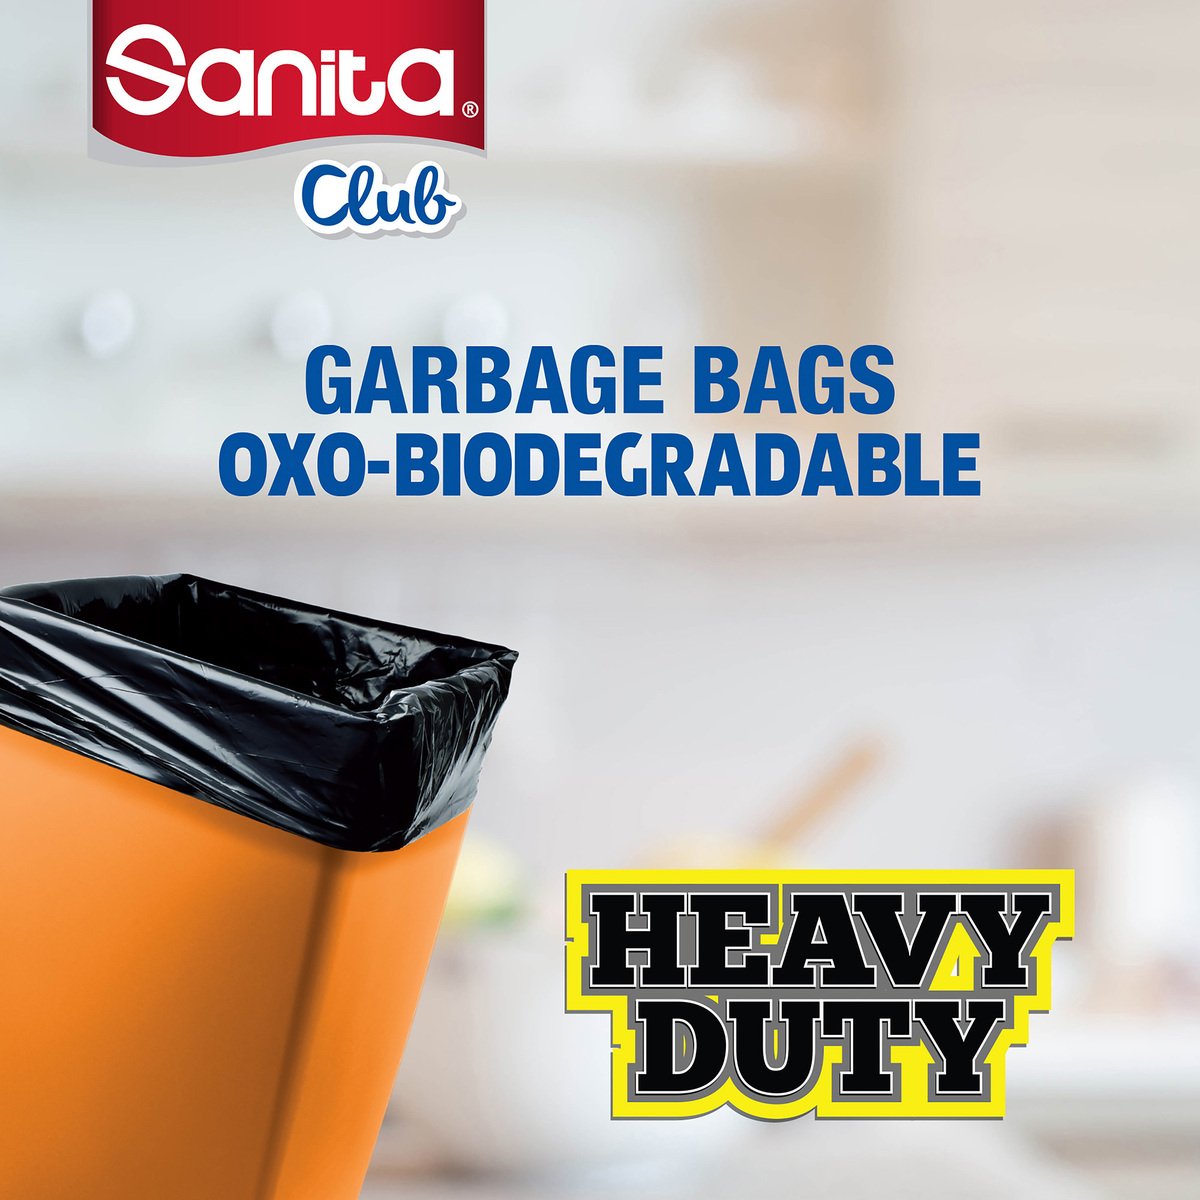 Sanita Club Garbage Bags Oxo-Biodegradable Medium, 30 Gallons Size 72 x 85 cms, 20 pcs